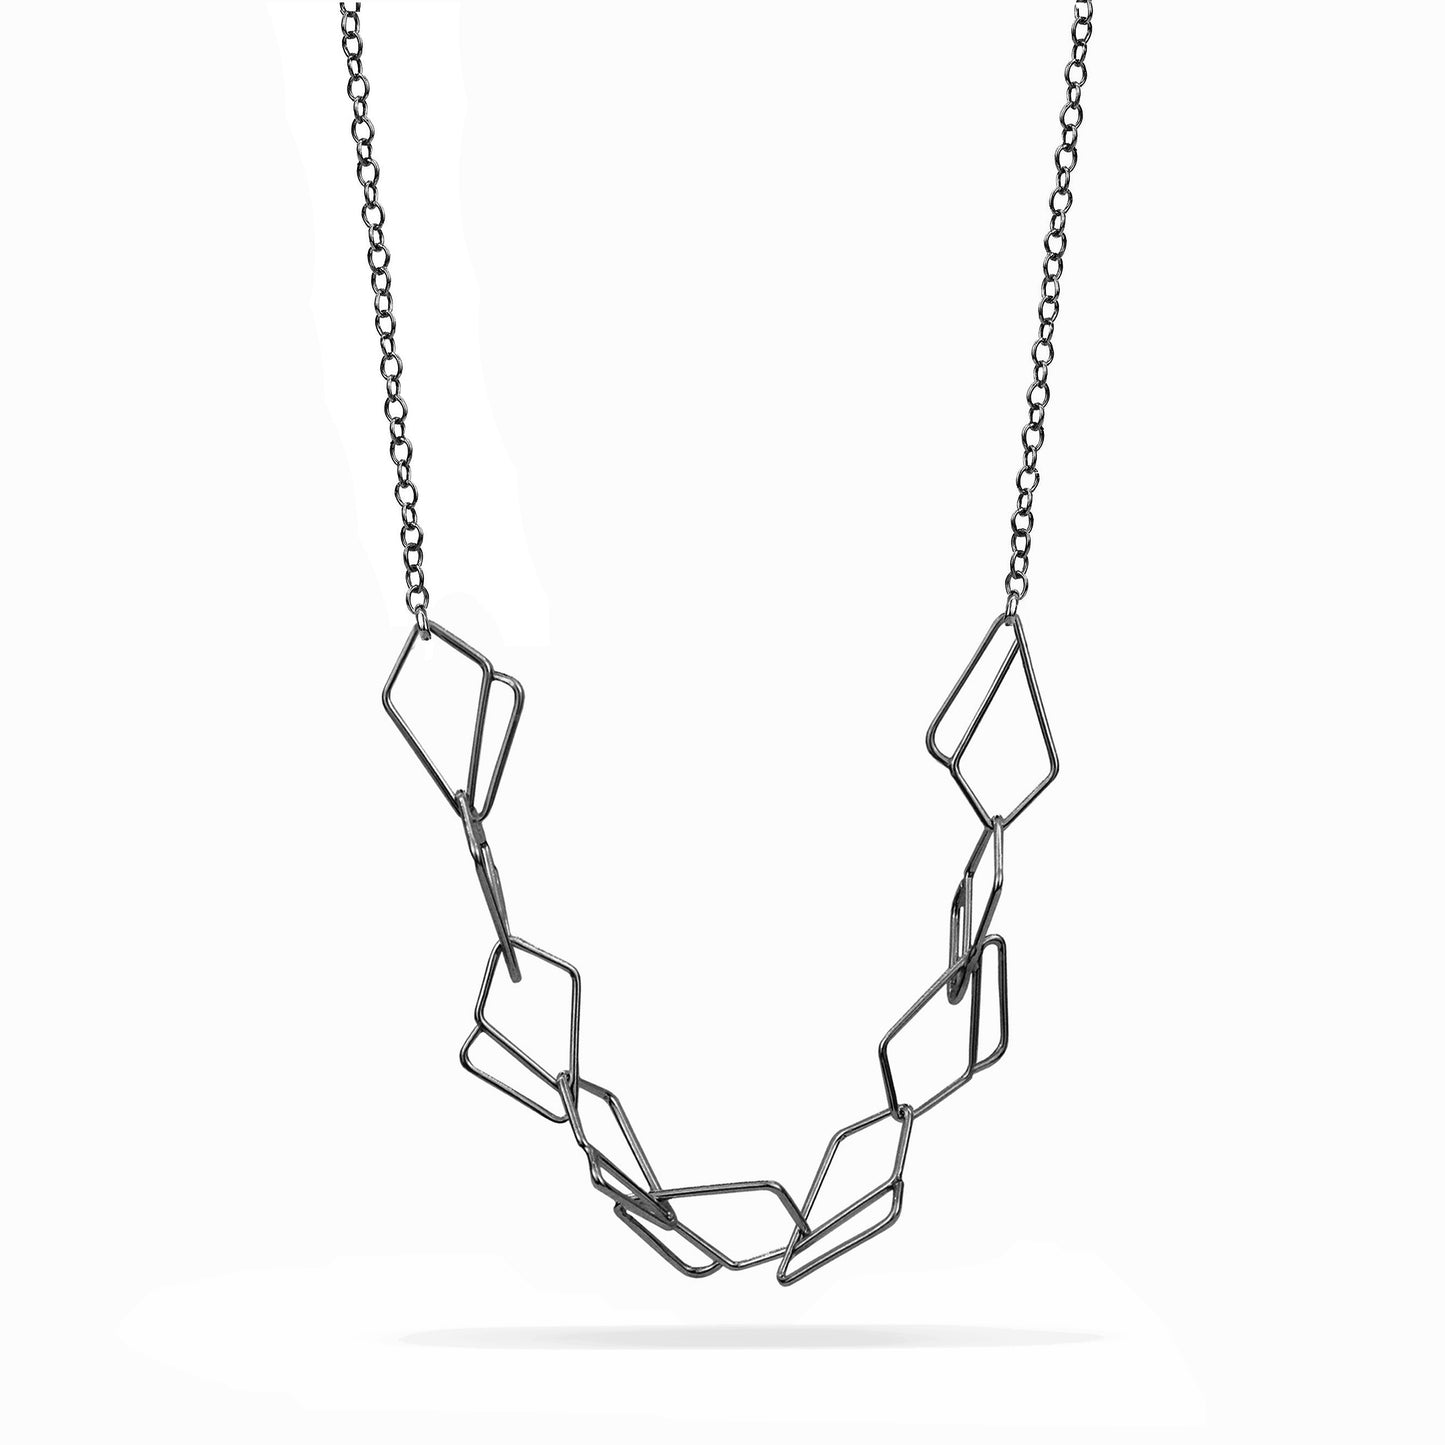 Ellis 9-Link Necklace